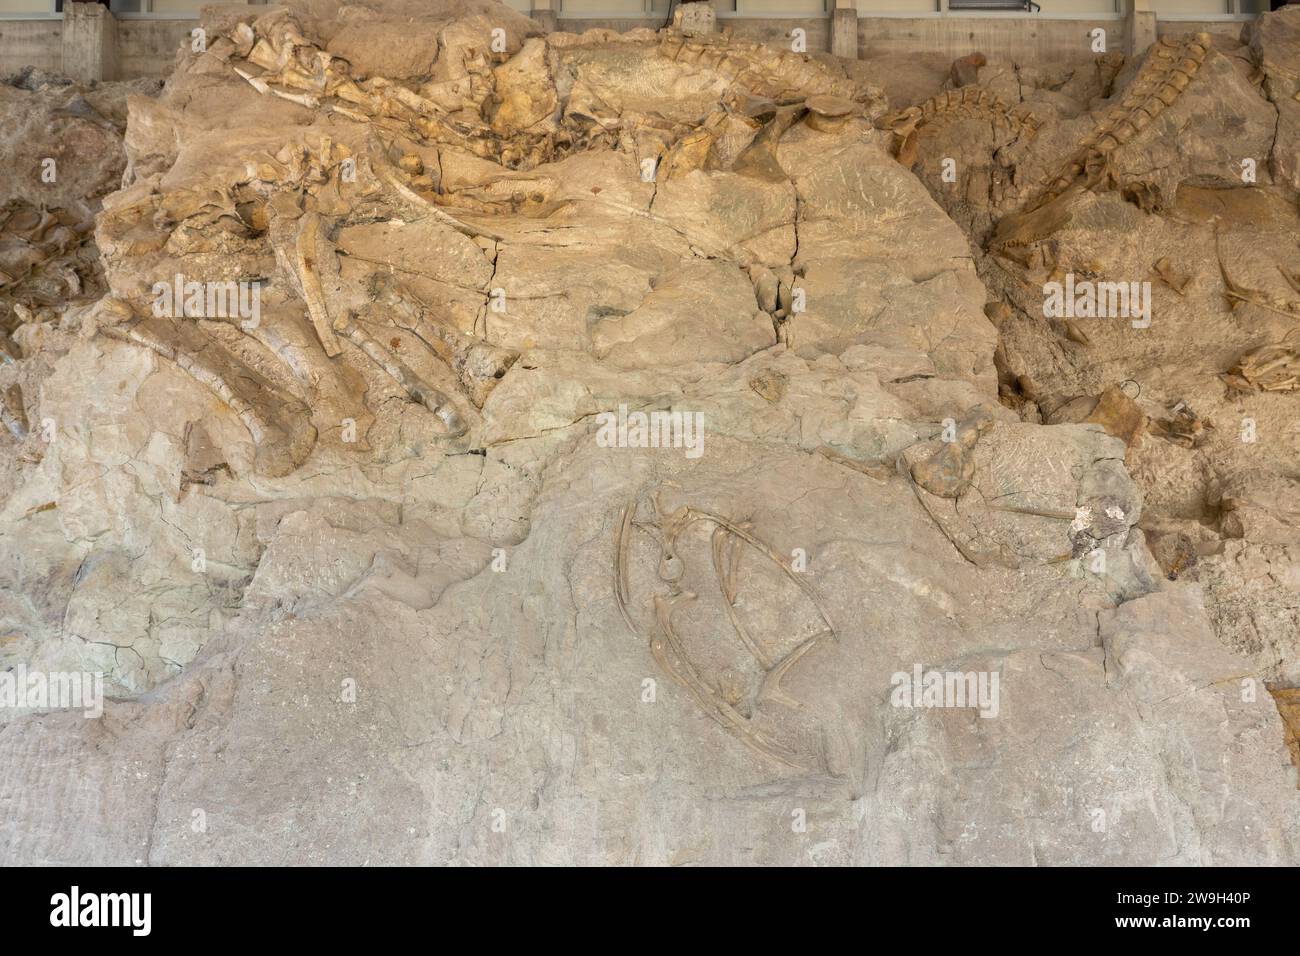 Partially-excavated dinosaur bones on the Wall of Bones in the Quarry Exhibit Hall, Dinosaur National Monument, Utah. Stock Photo